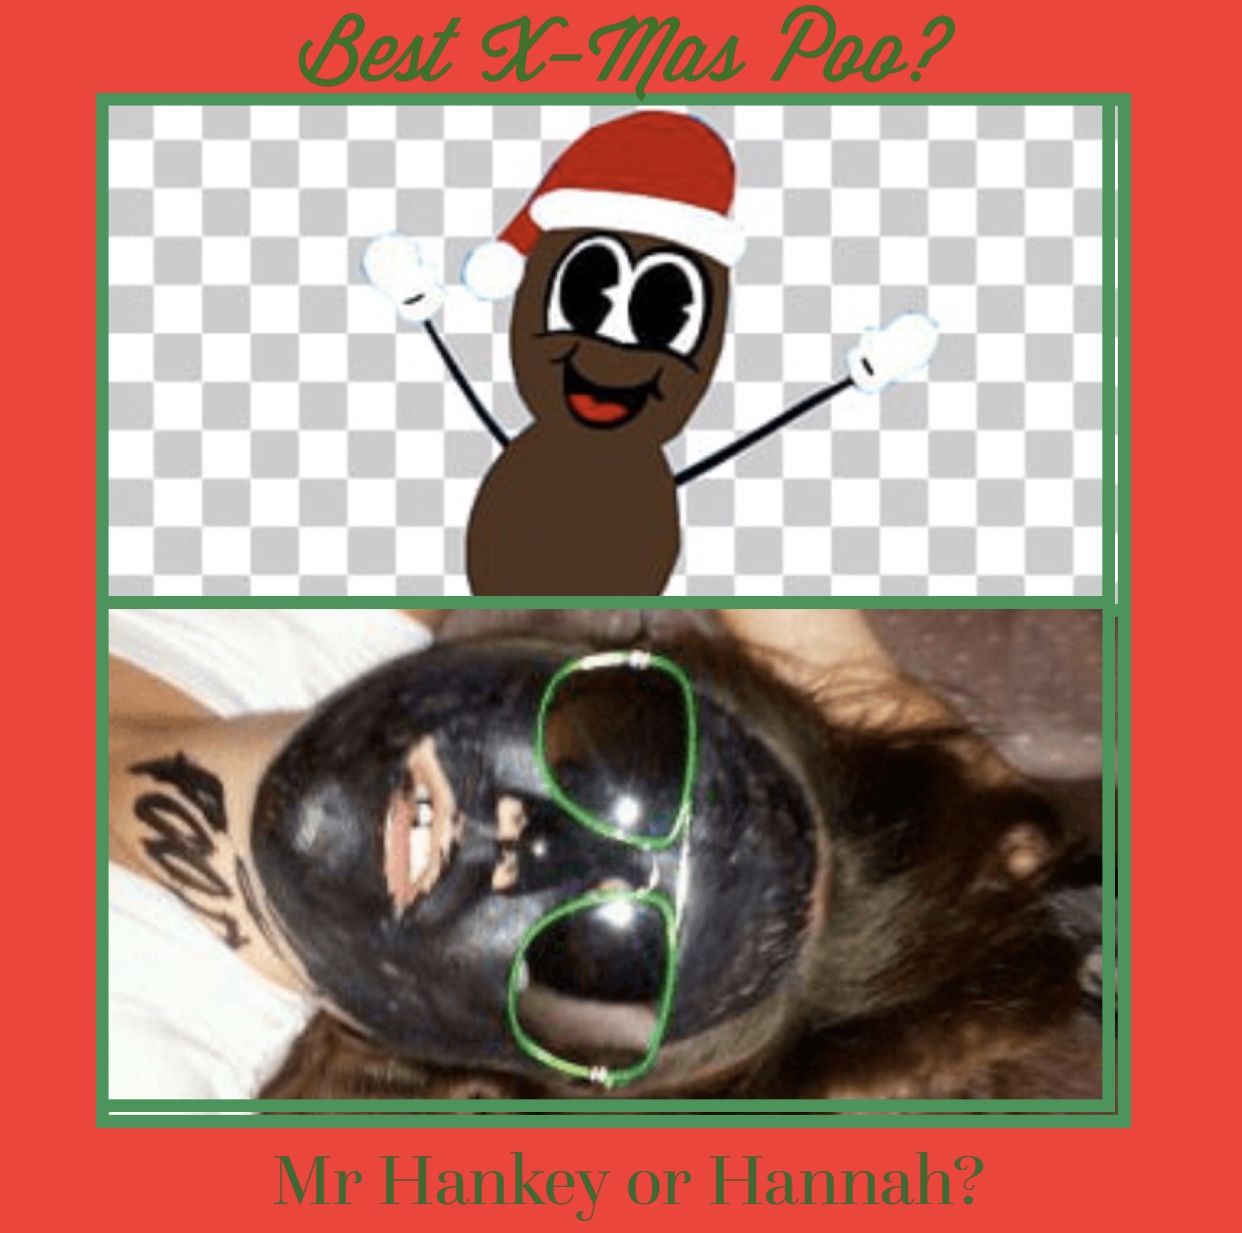 Icon - Best XMas Pee? Mr Hankey or Hannah?